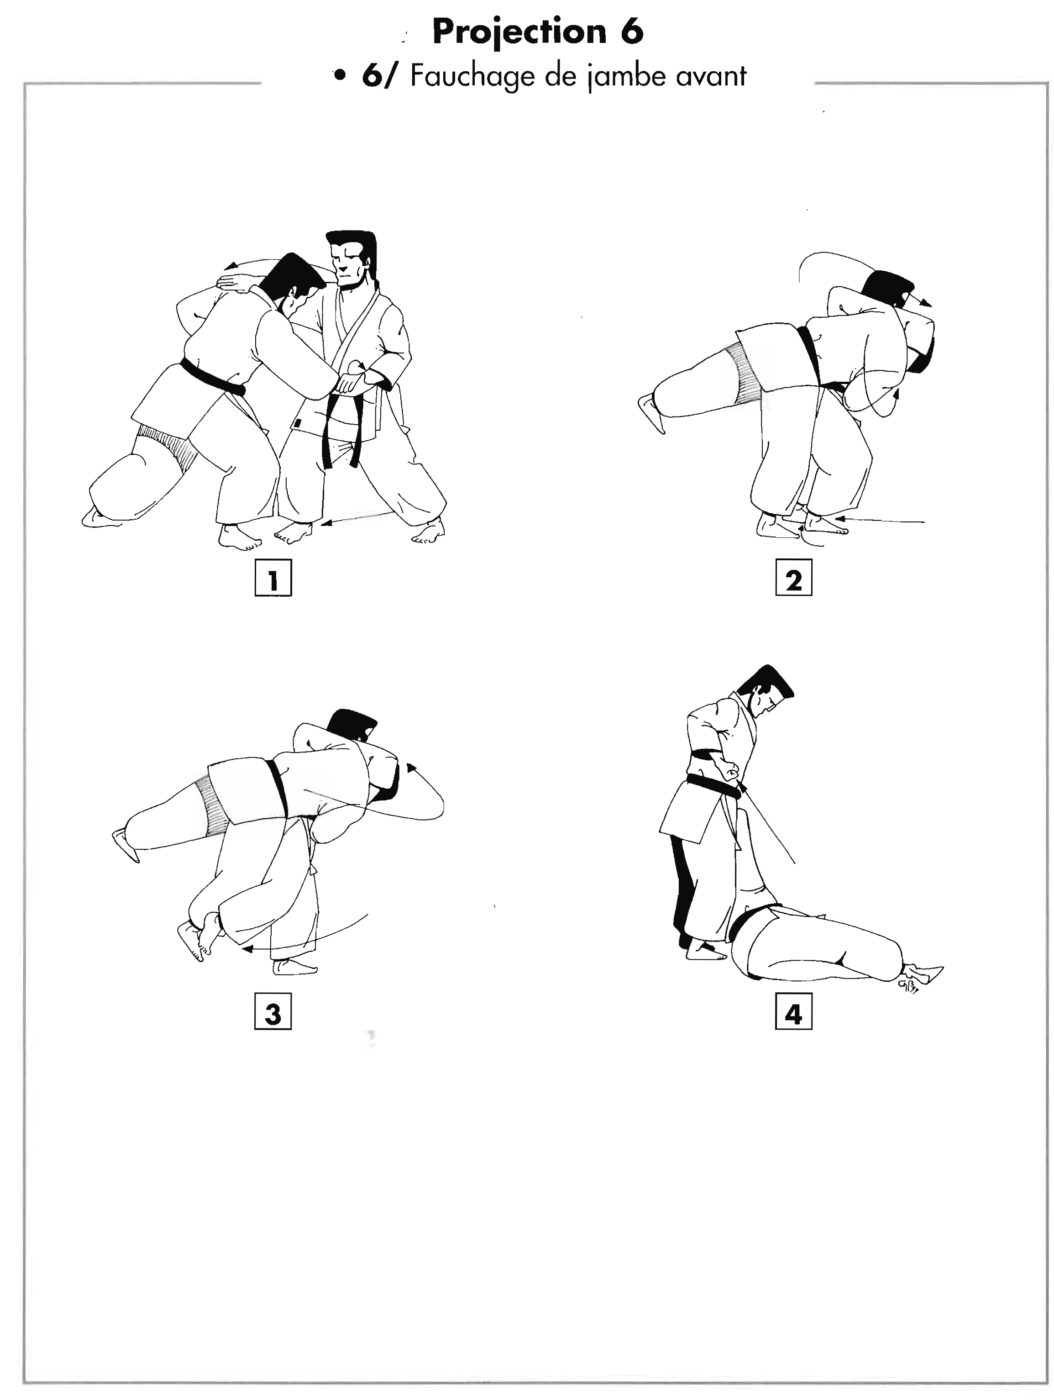 Projection 6 : harai goshi – fauchage de jambe avant